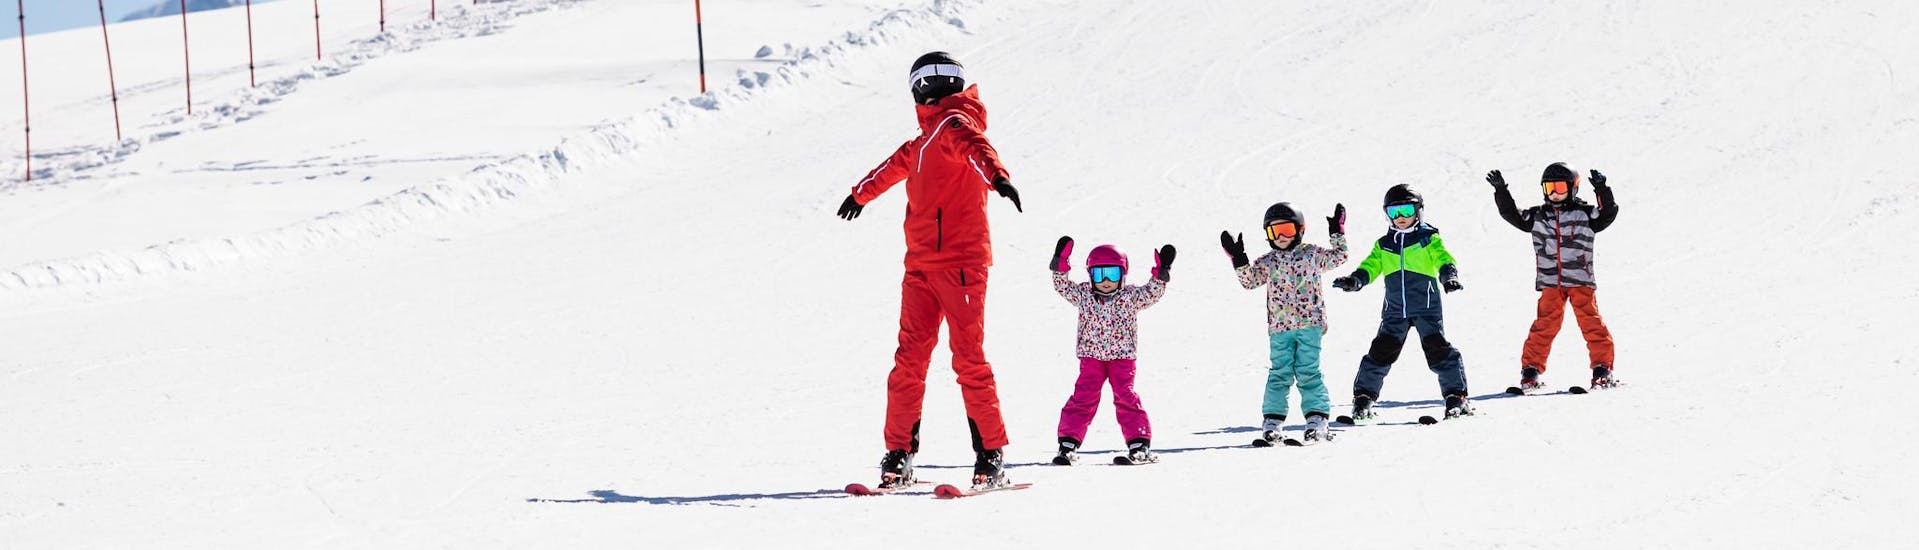 Ski instructor and kids enjoy a ski lesson with a ski school near Aachen.